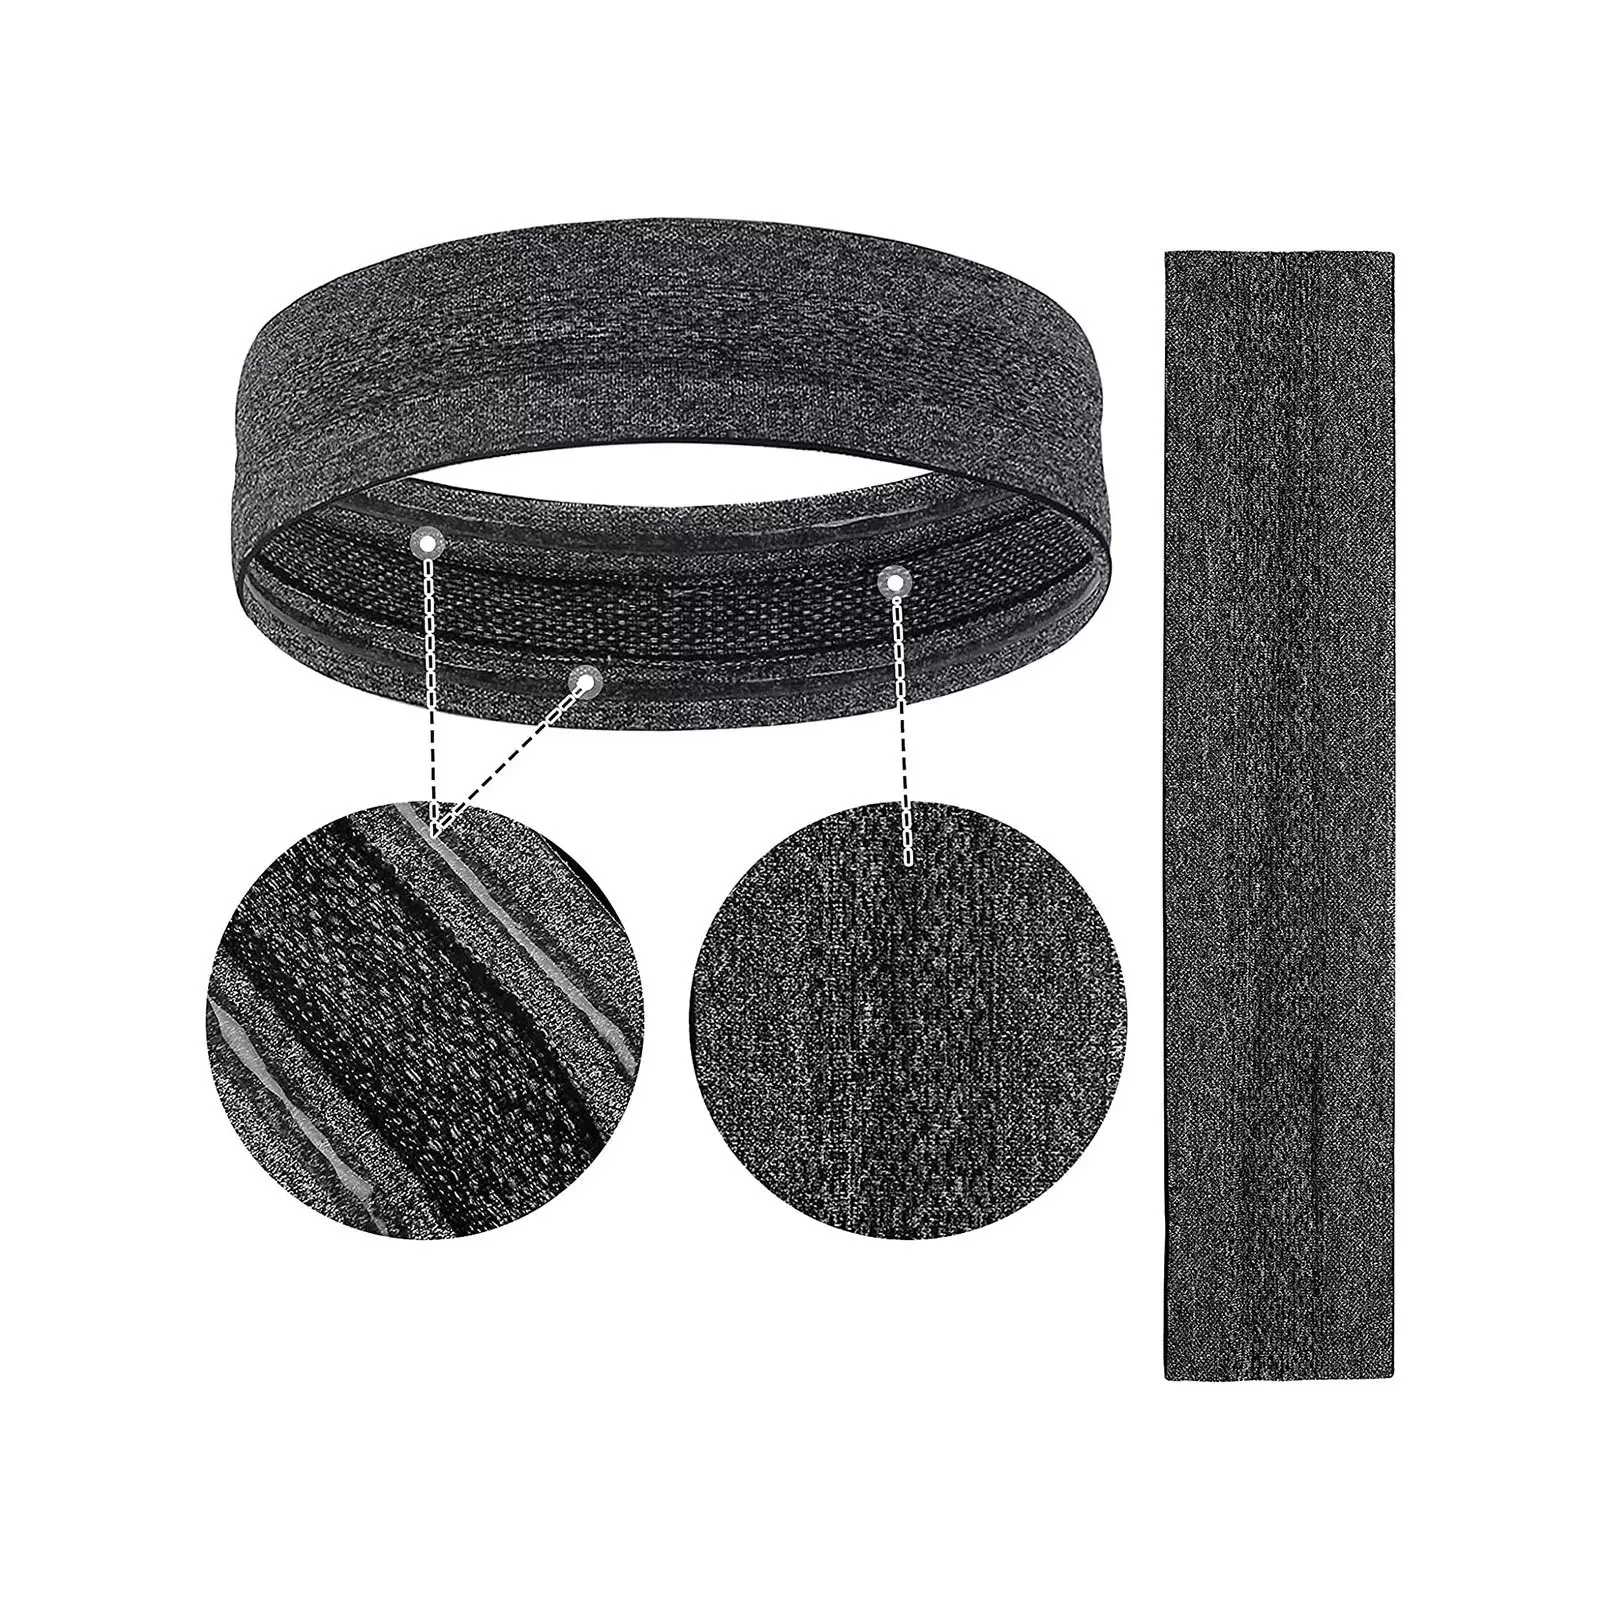 Gray fabric elastic headband for Head band grey, Sportswear